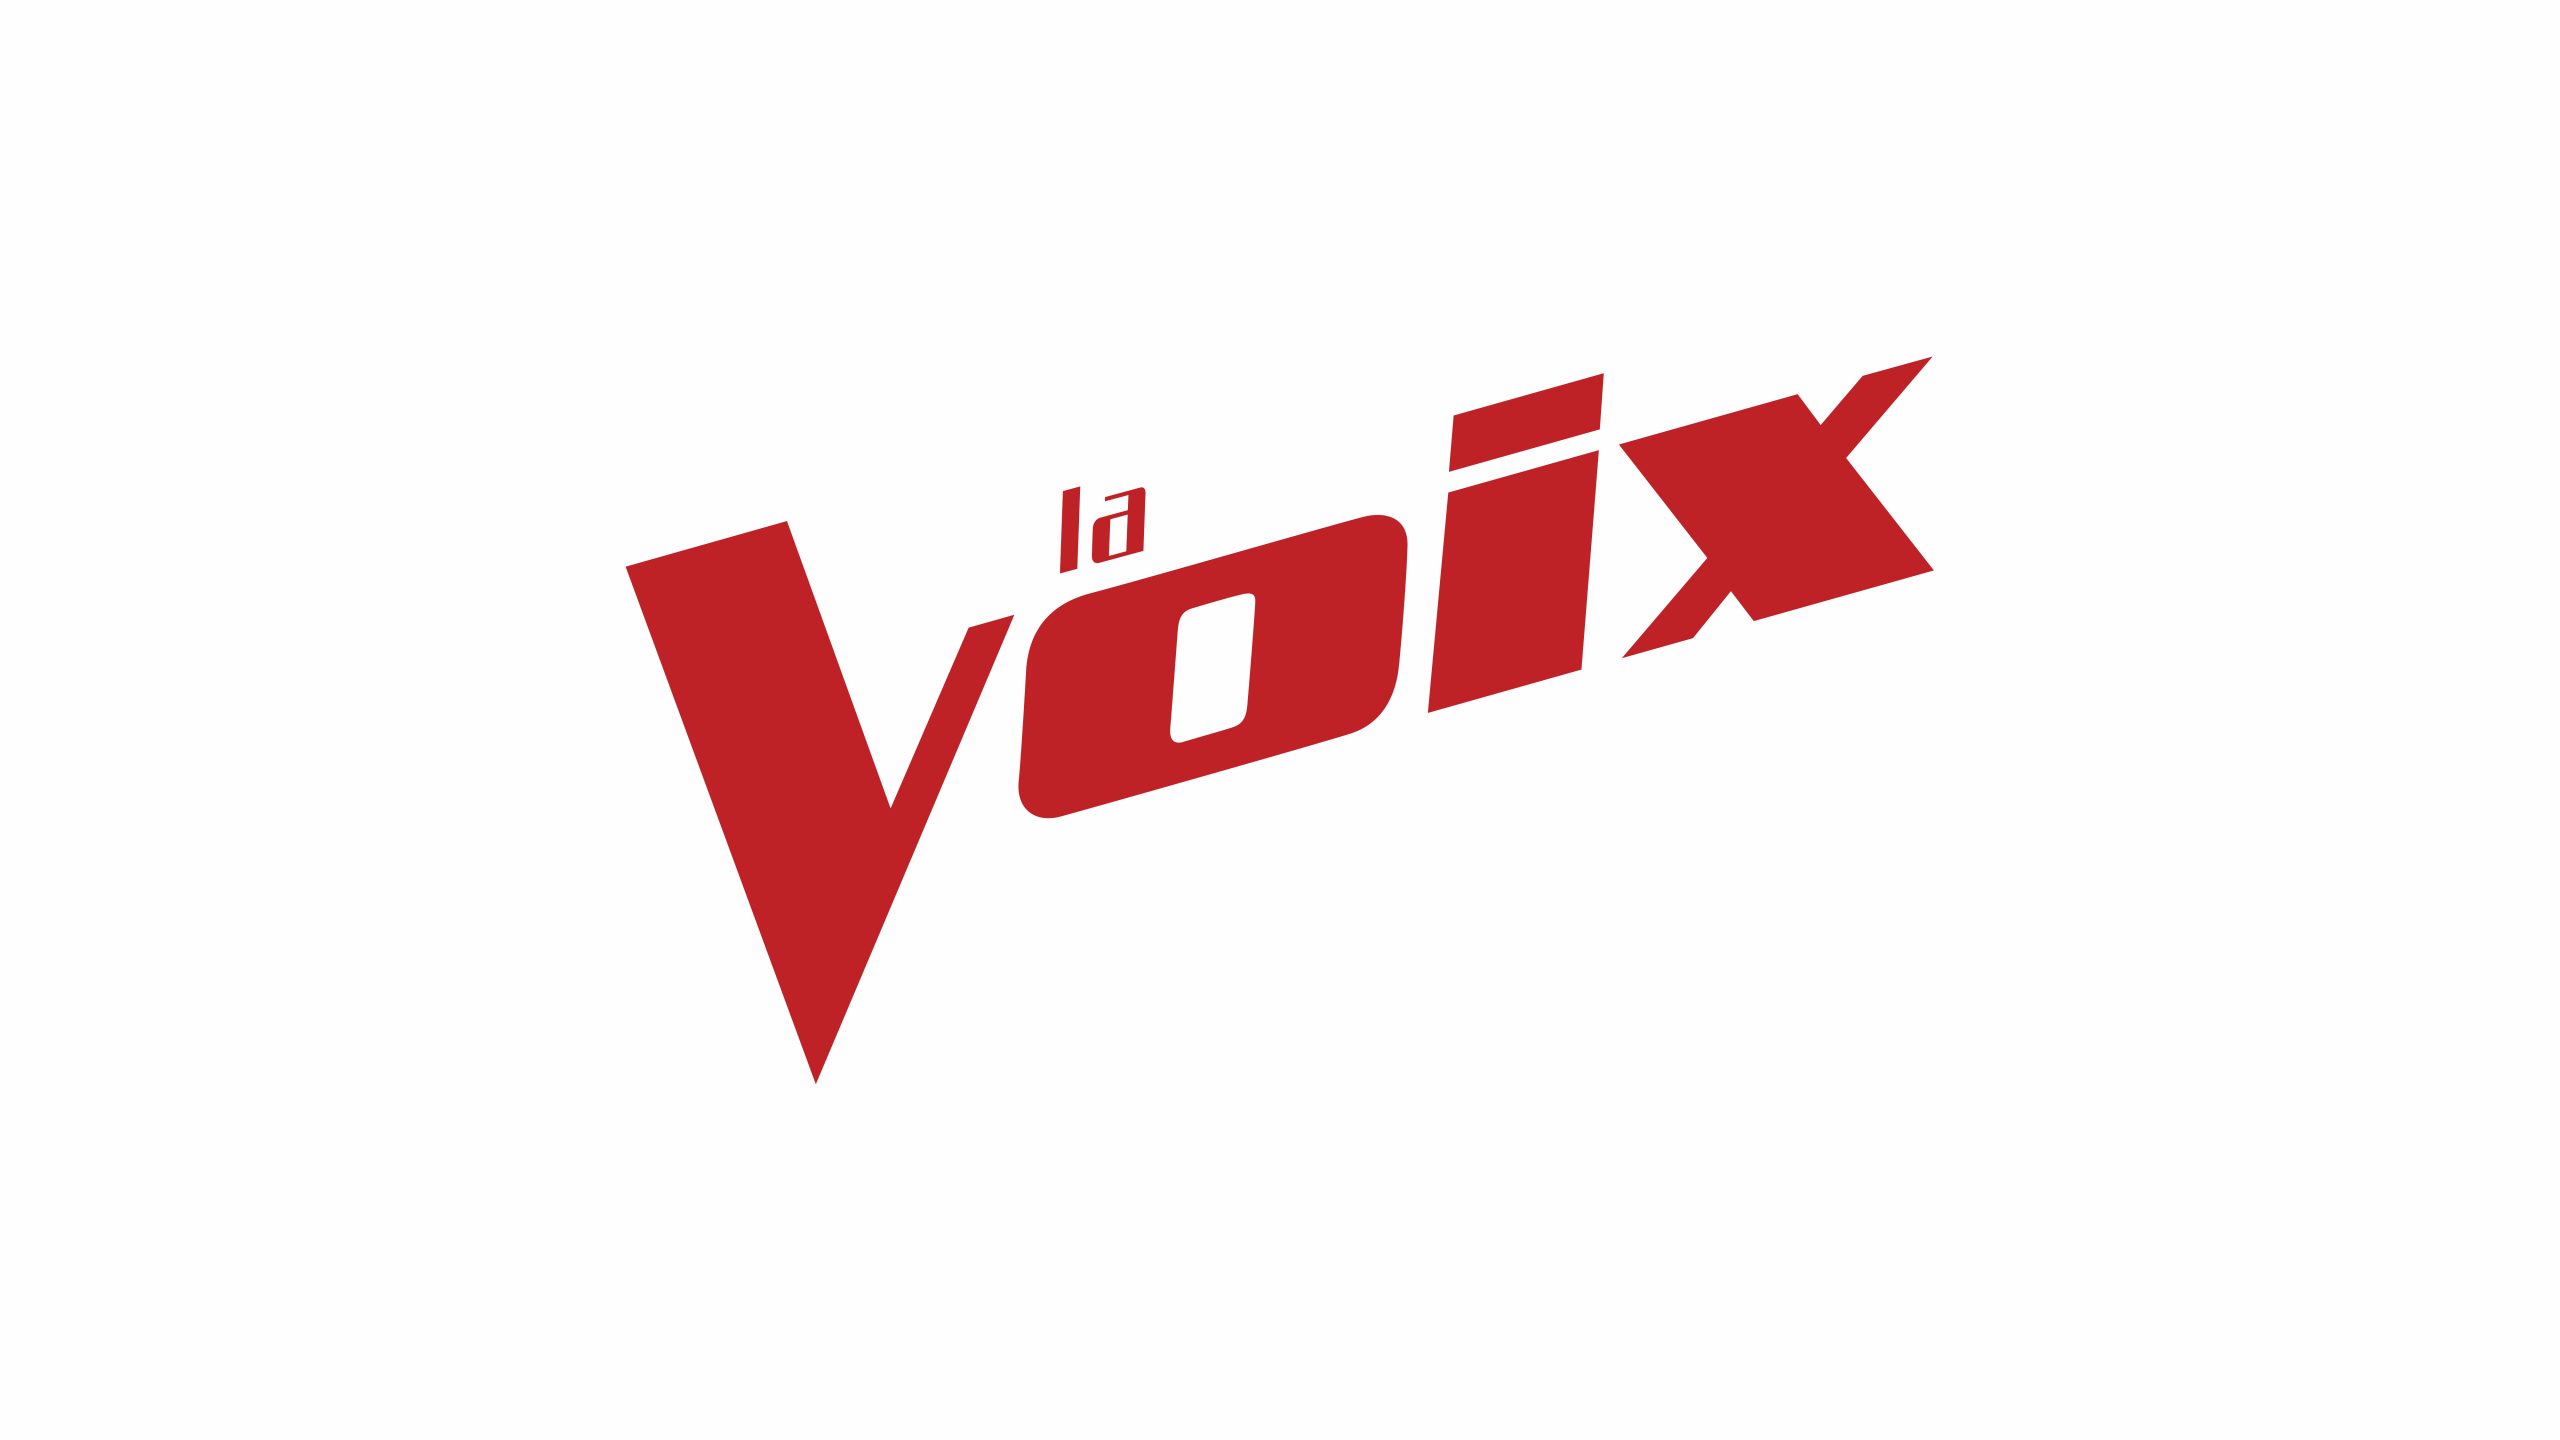 Toprated ‘La Voix’ returns to TVA Cartt.ca